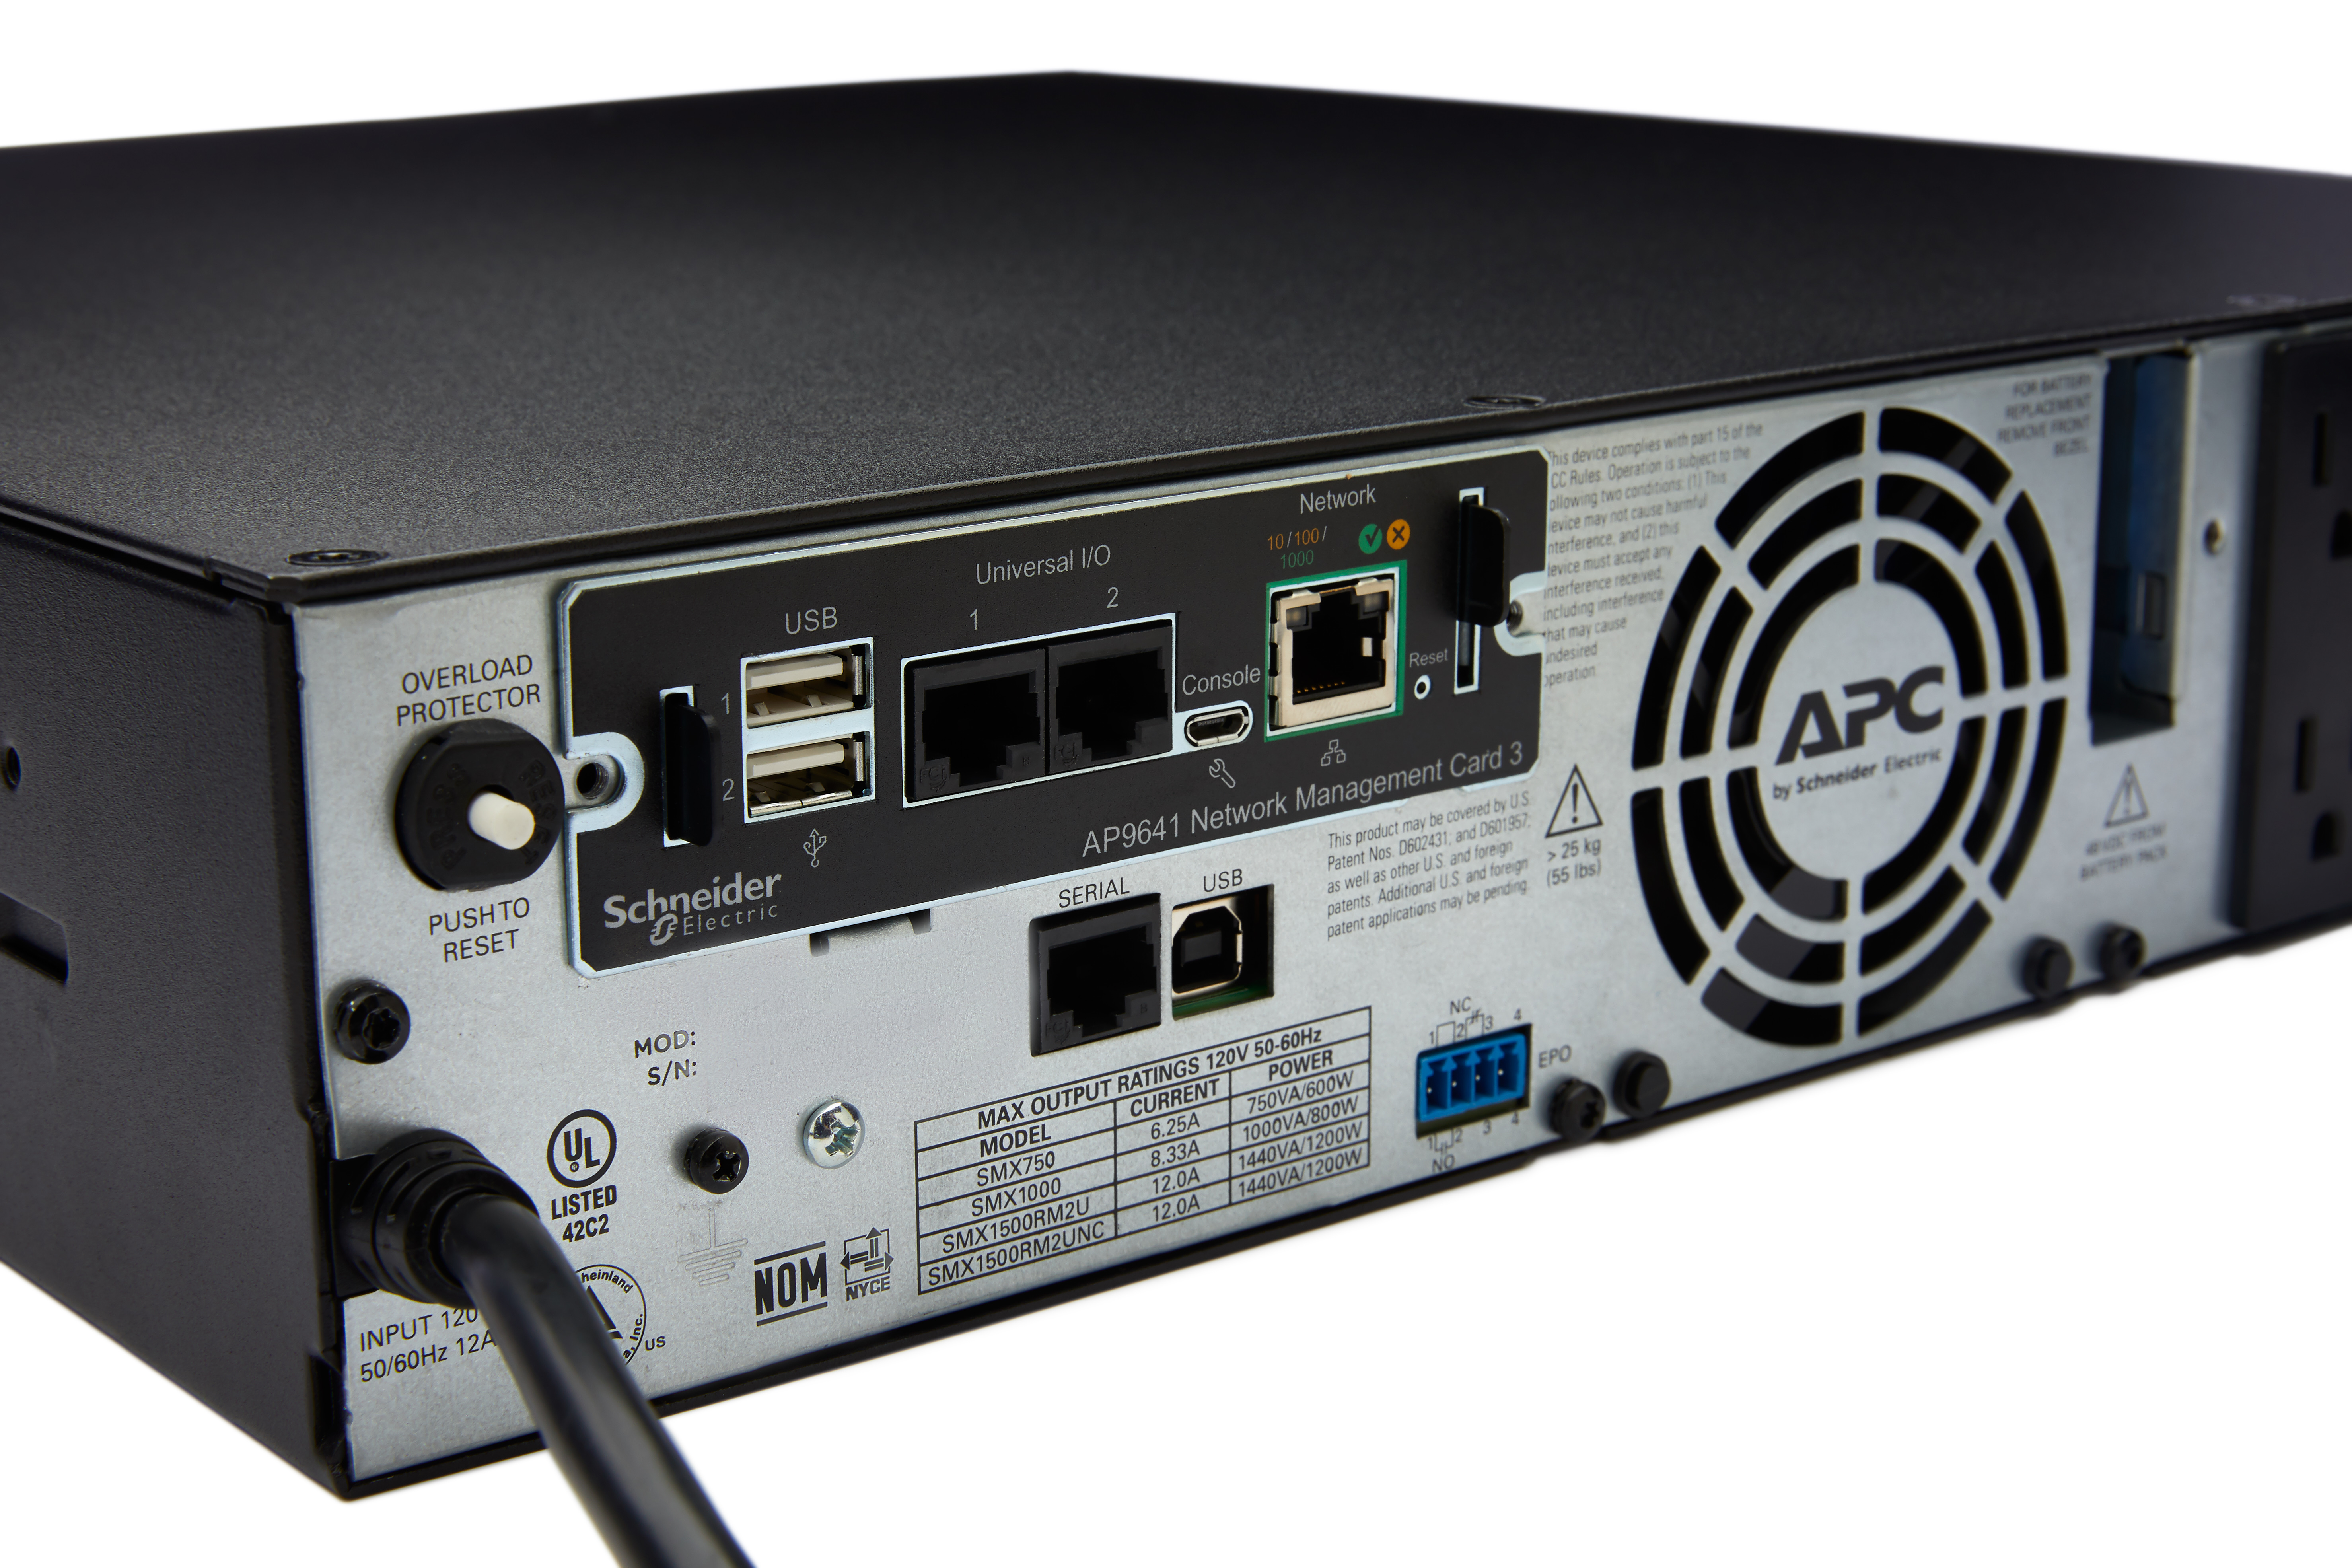 APC Network Management Card 3 with PowerChute Network Shutdown & Environmental Monitoring